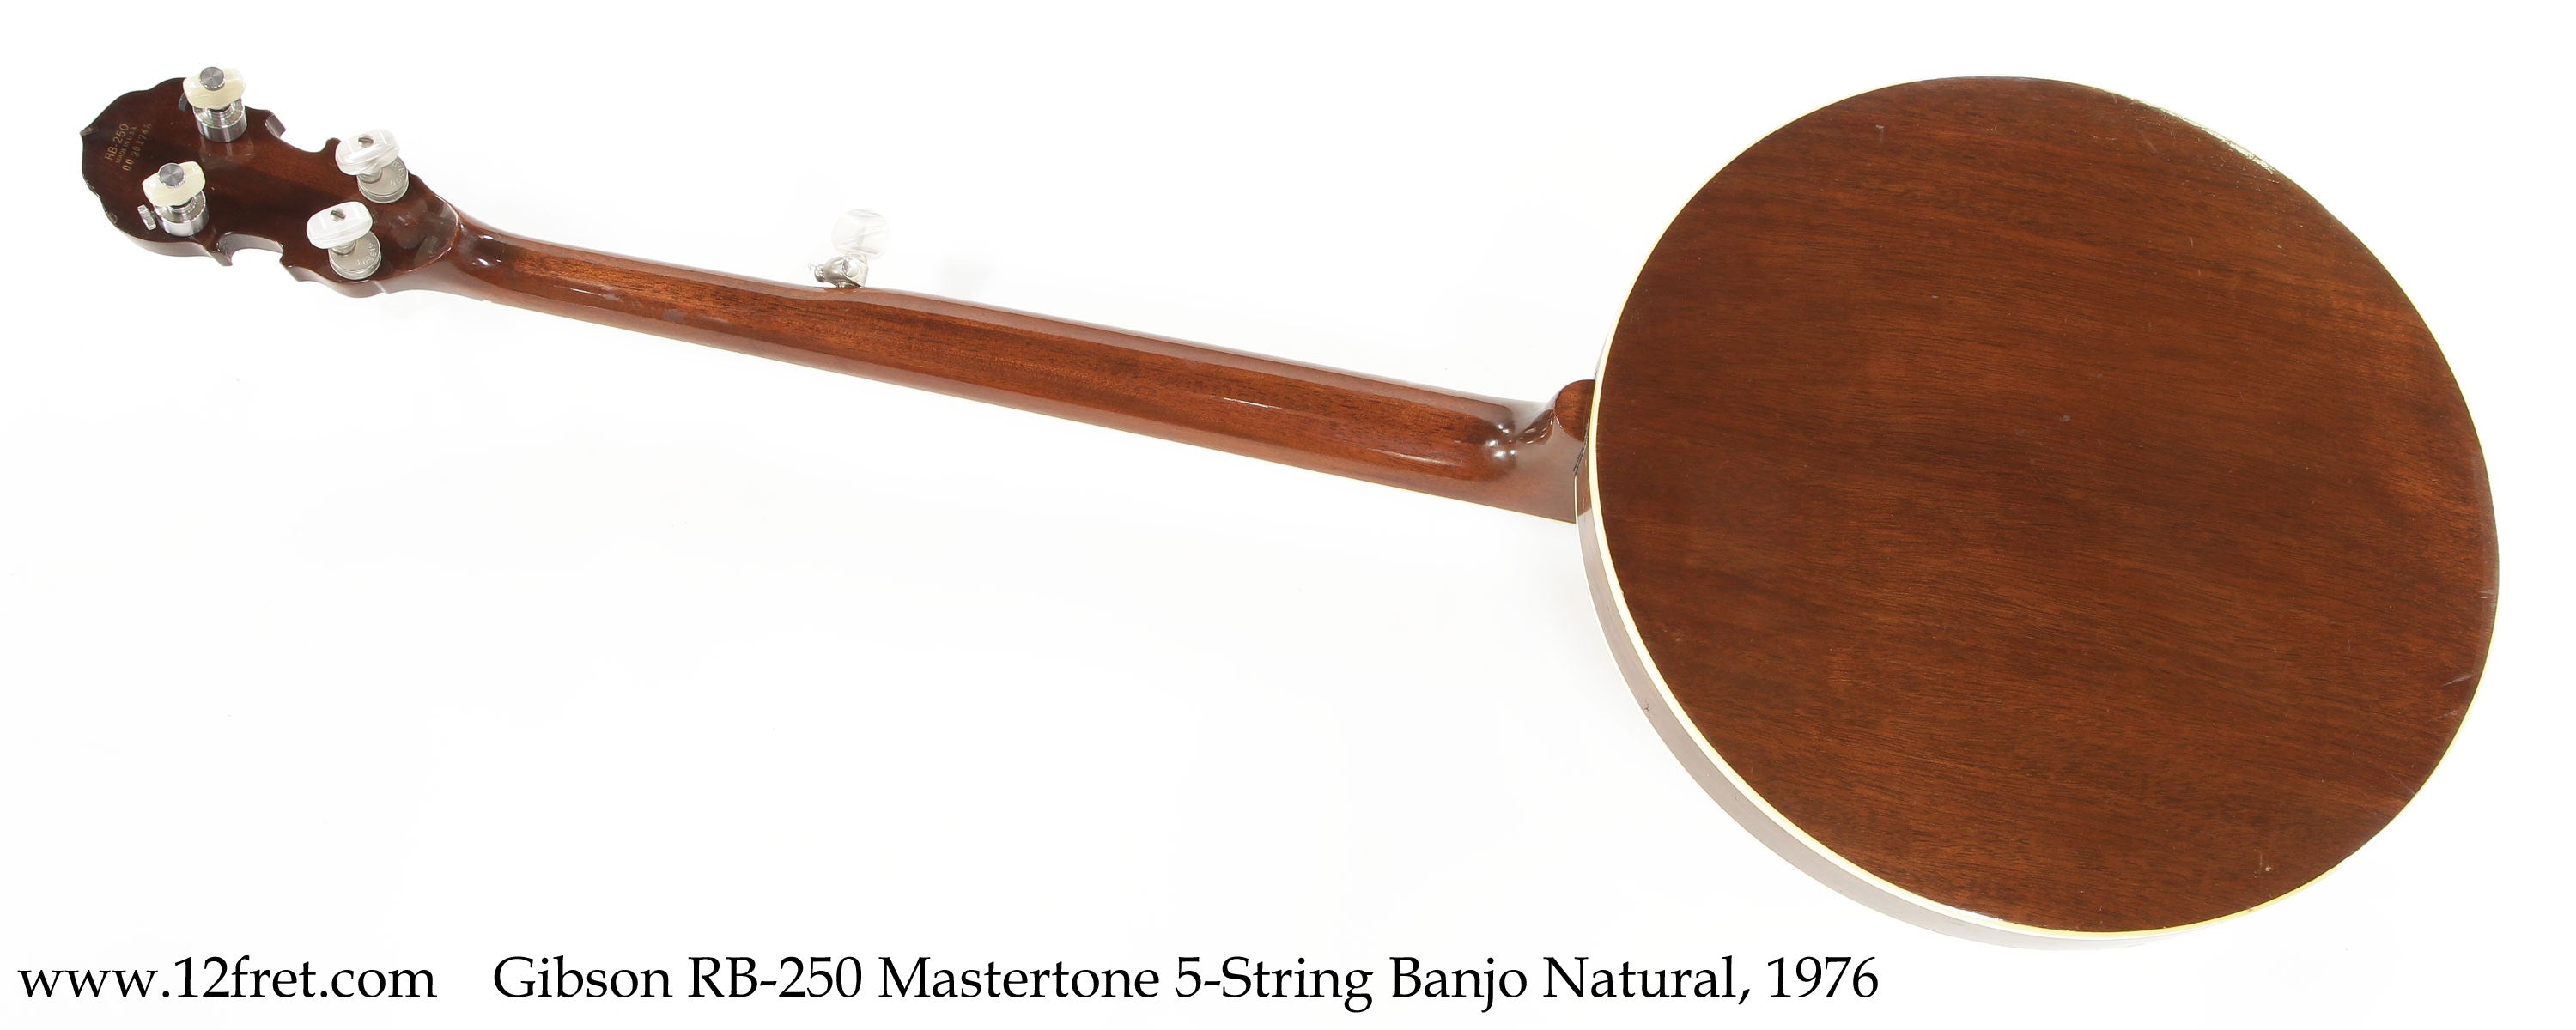 Gibson RB-250 5-String Banjo Natural, 1976  - The Twelfth Fret